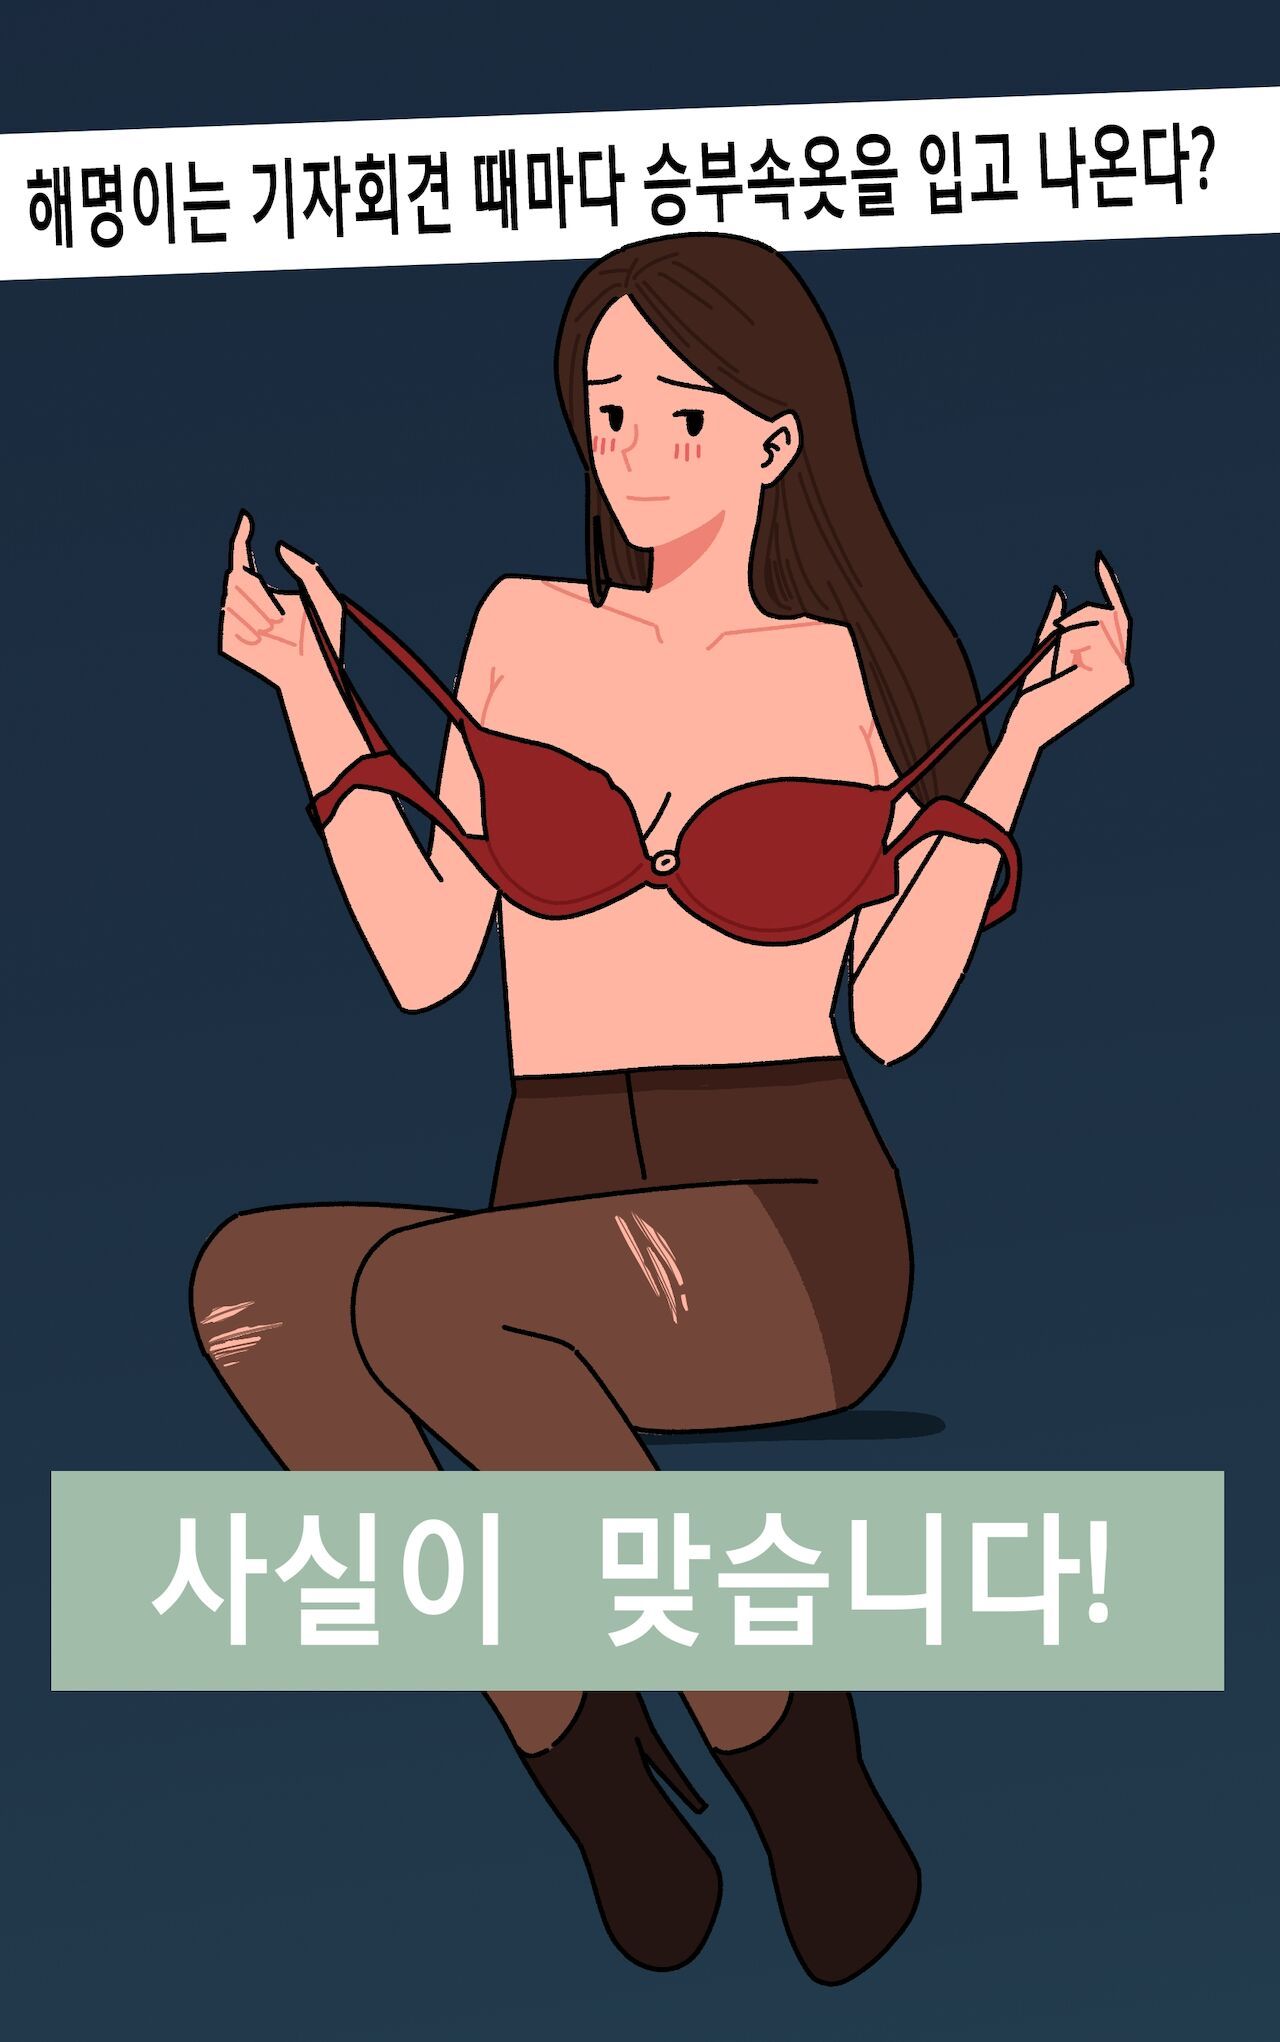 Dot eyes, It's NOT true!, "That art style" (South Korean propaganda, meme and Satire) 점눈깔, 사실이 아닙니다!, 해명이, "그 그림체" 21